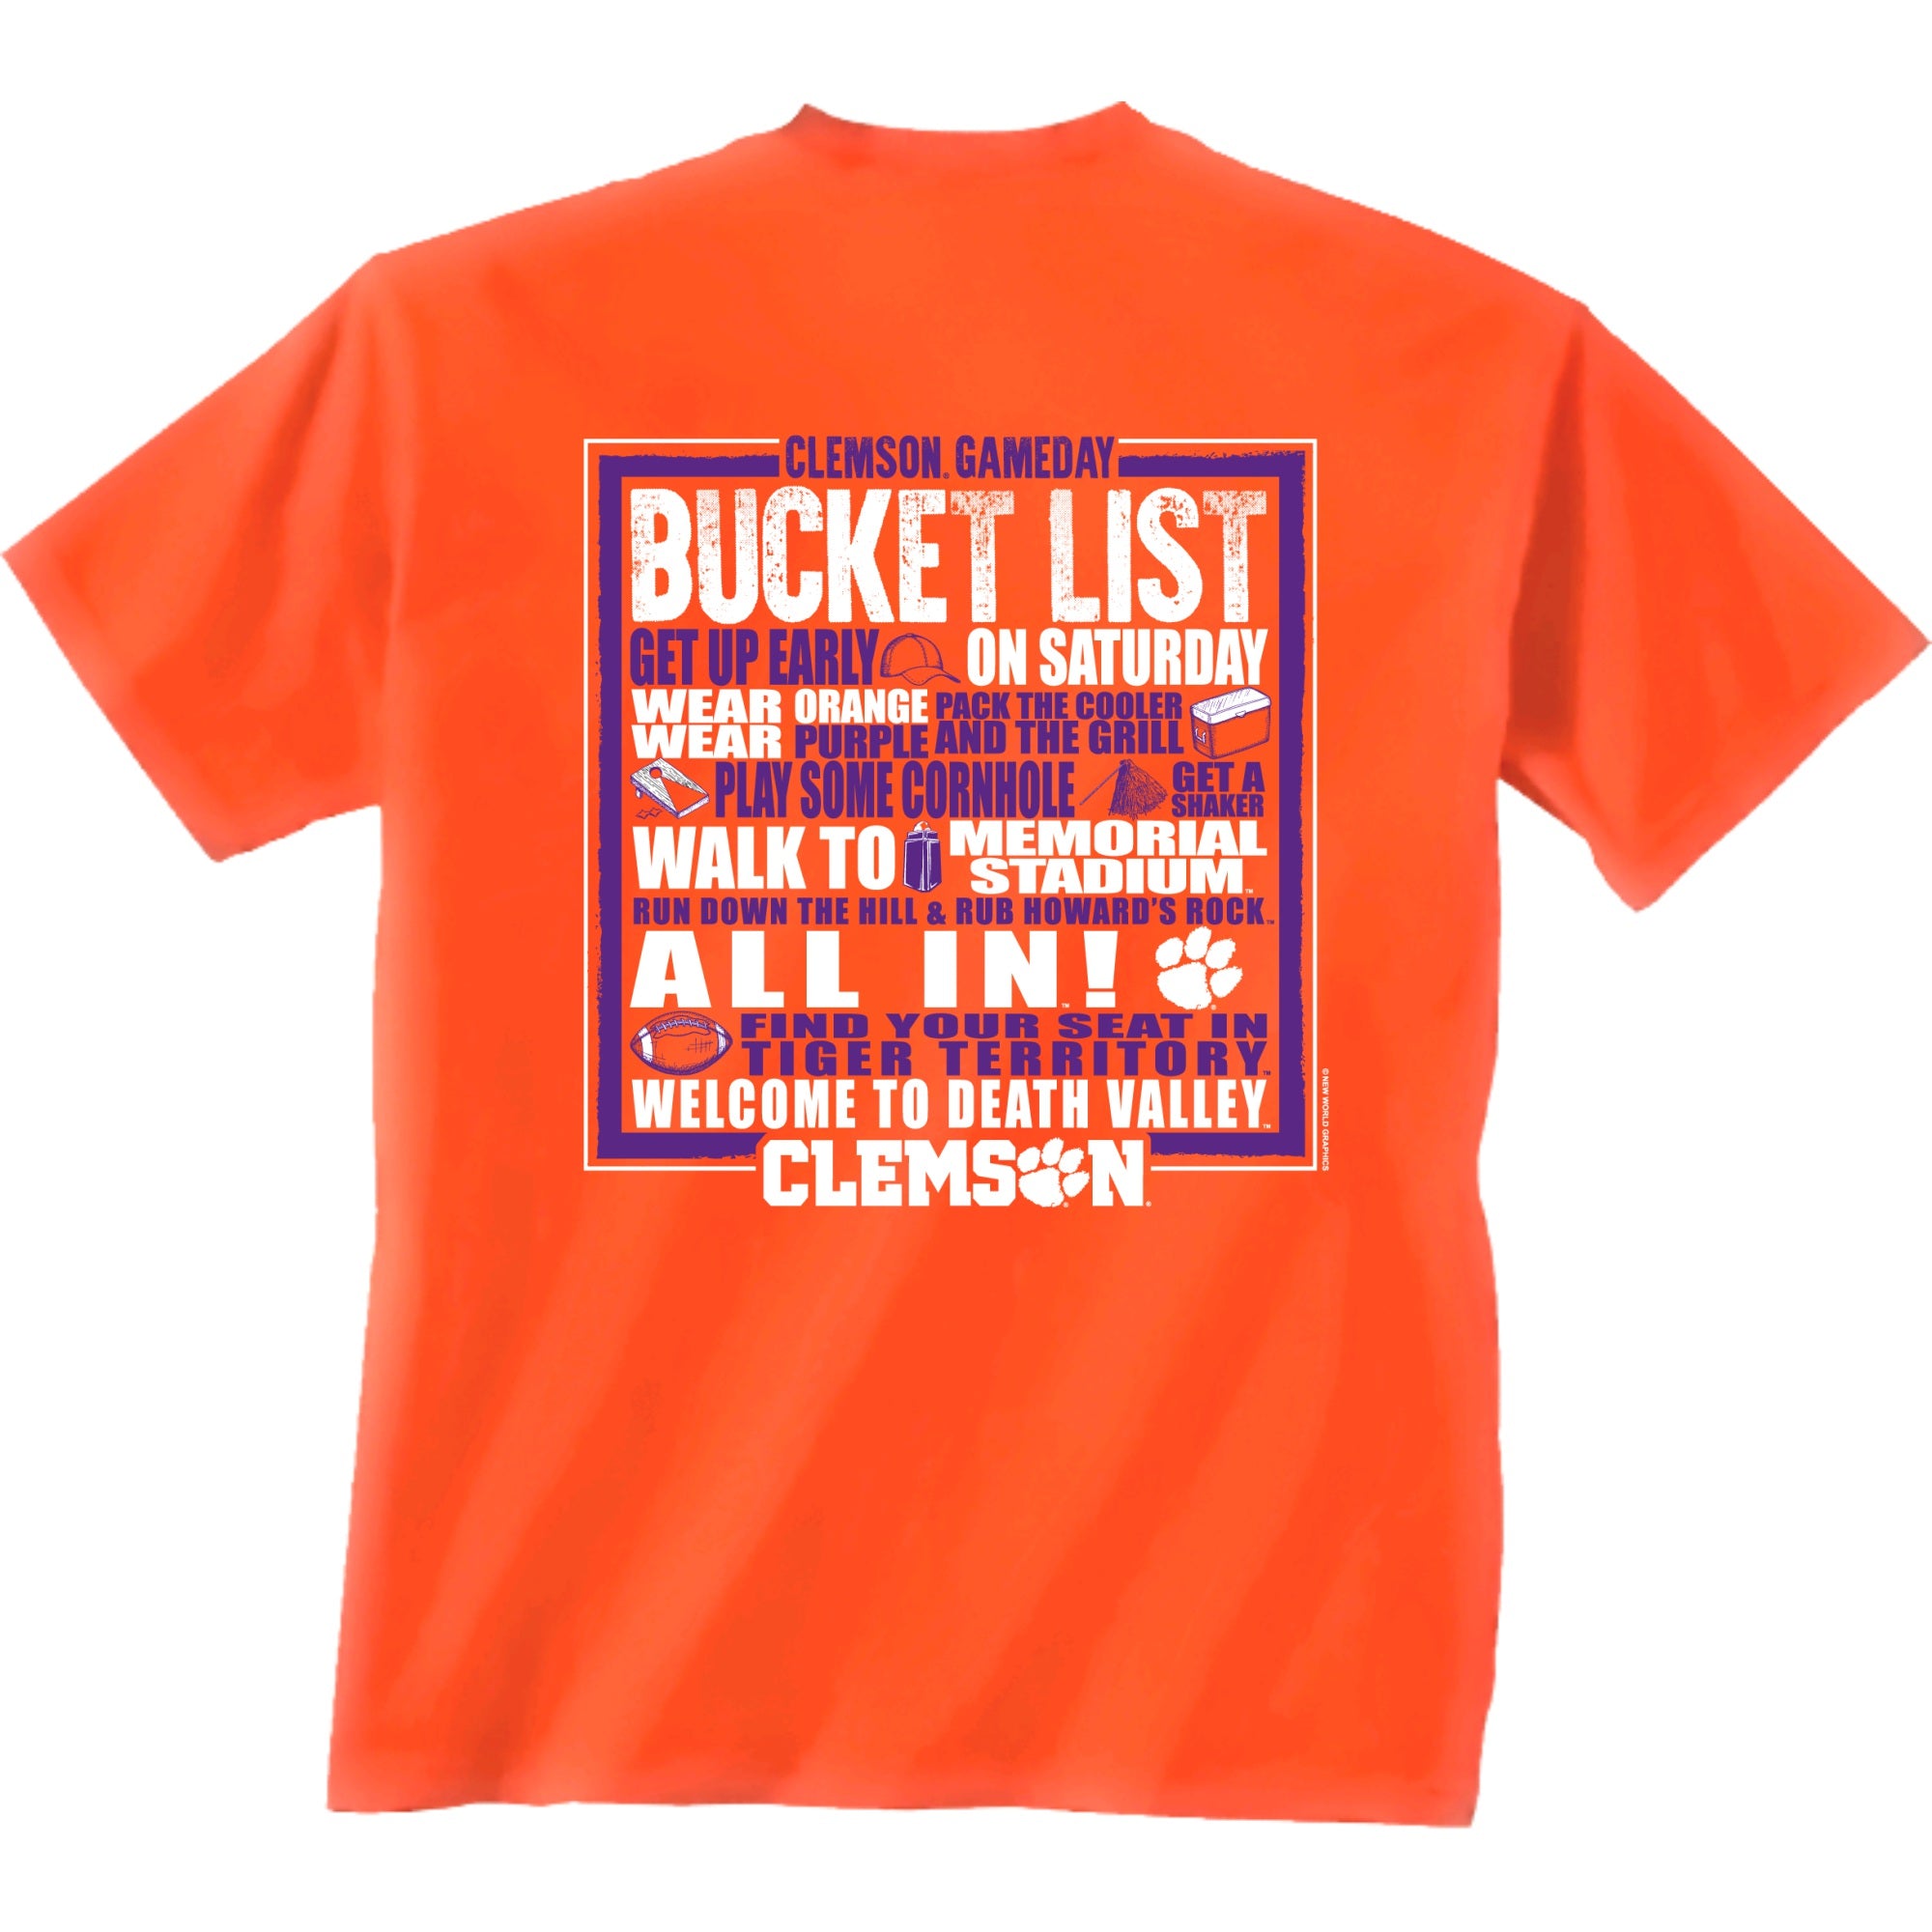 Clemson "The Bucket List"